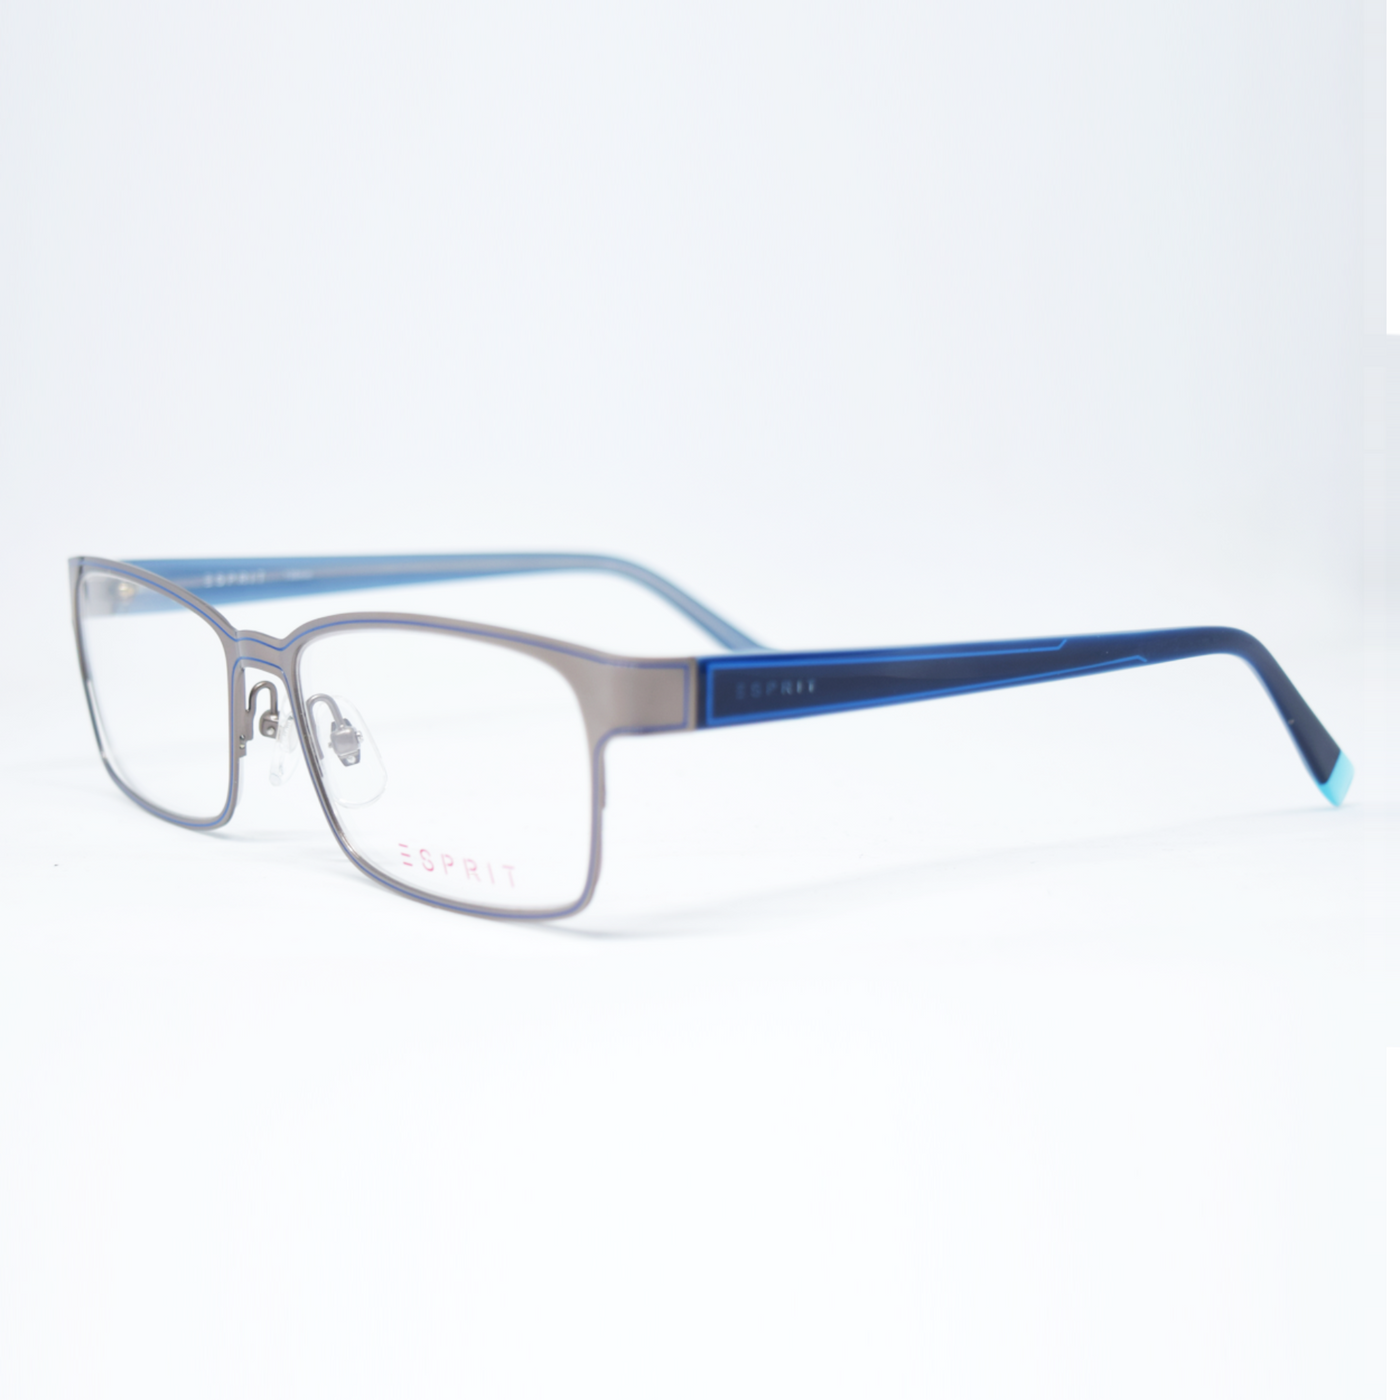 Esprit Men's Black Metal Rectangle Eyeglasses ET14170/538 - Vision Express Optical Philippines